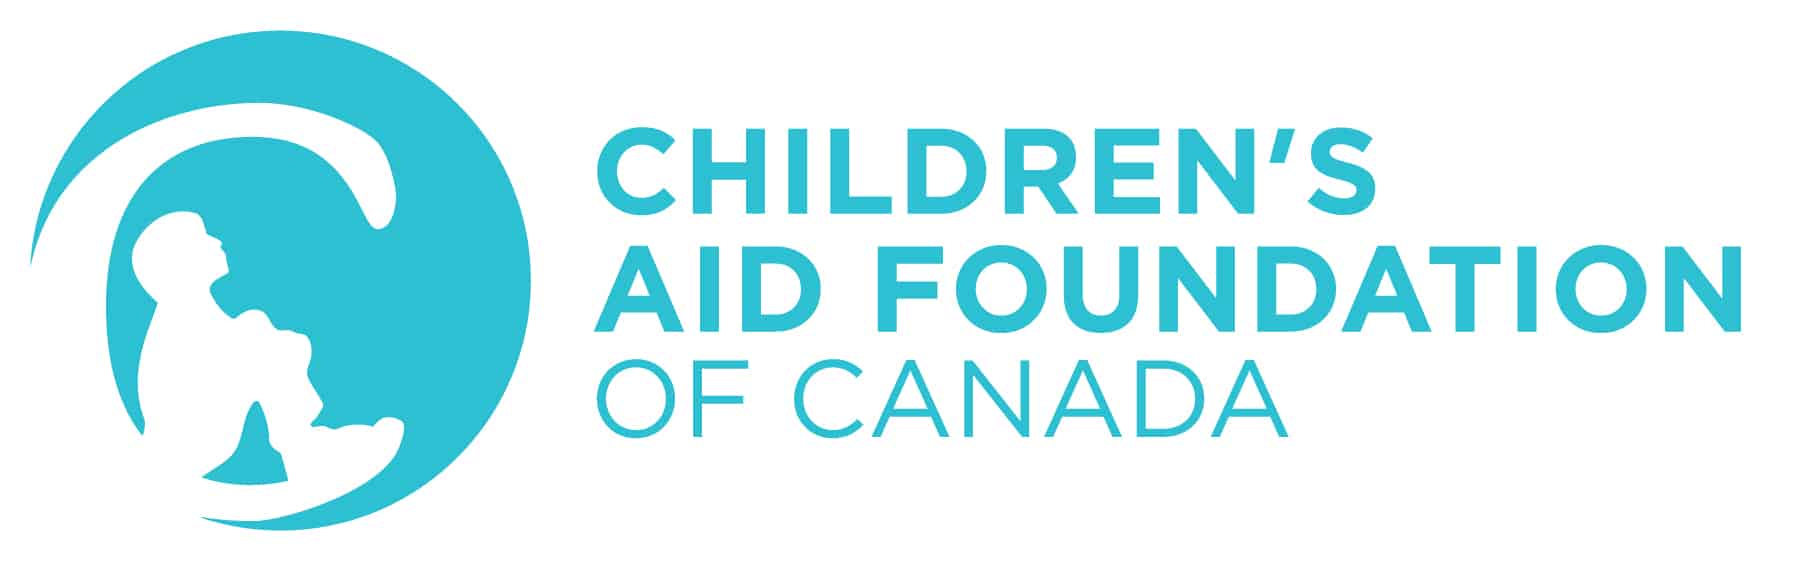 Children's Aid Foundation of Canada